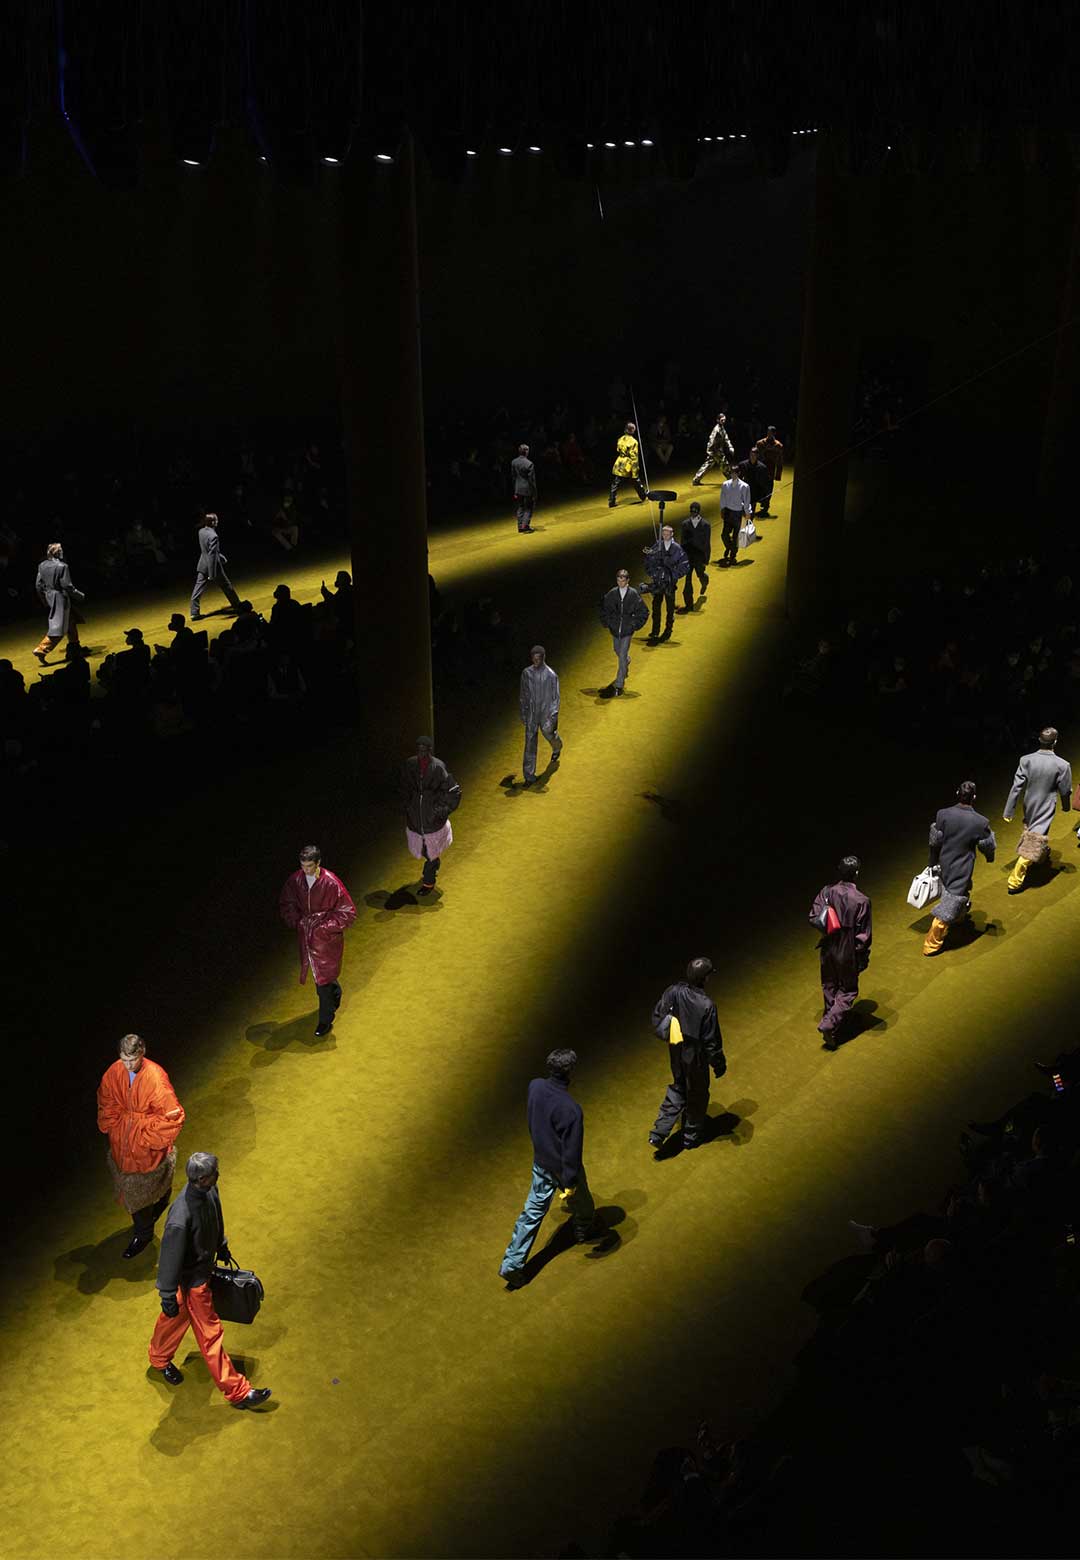 Prada’s Fall Winter 2022 Menswear collection ports viewers into a futuristic tunnel